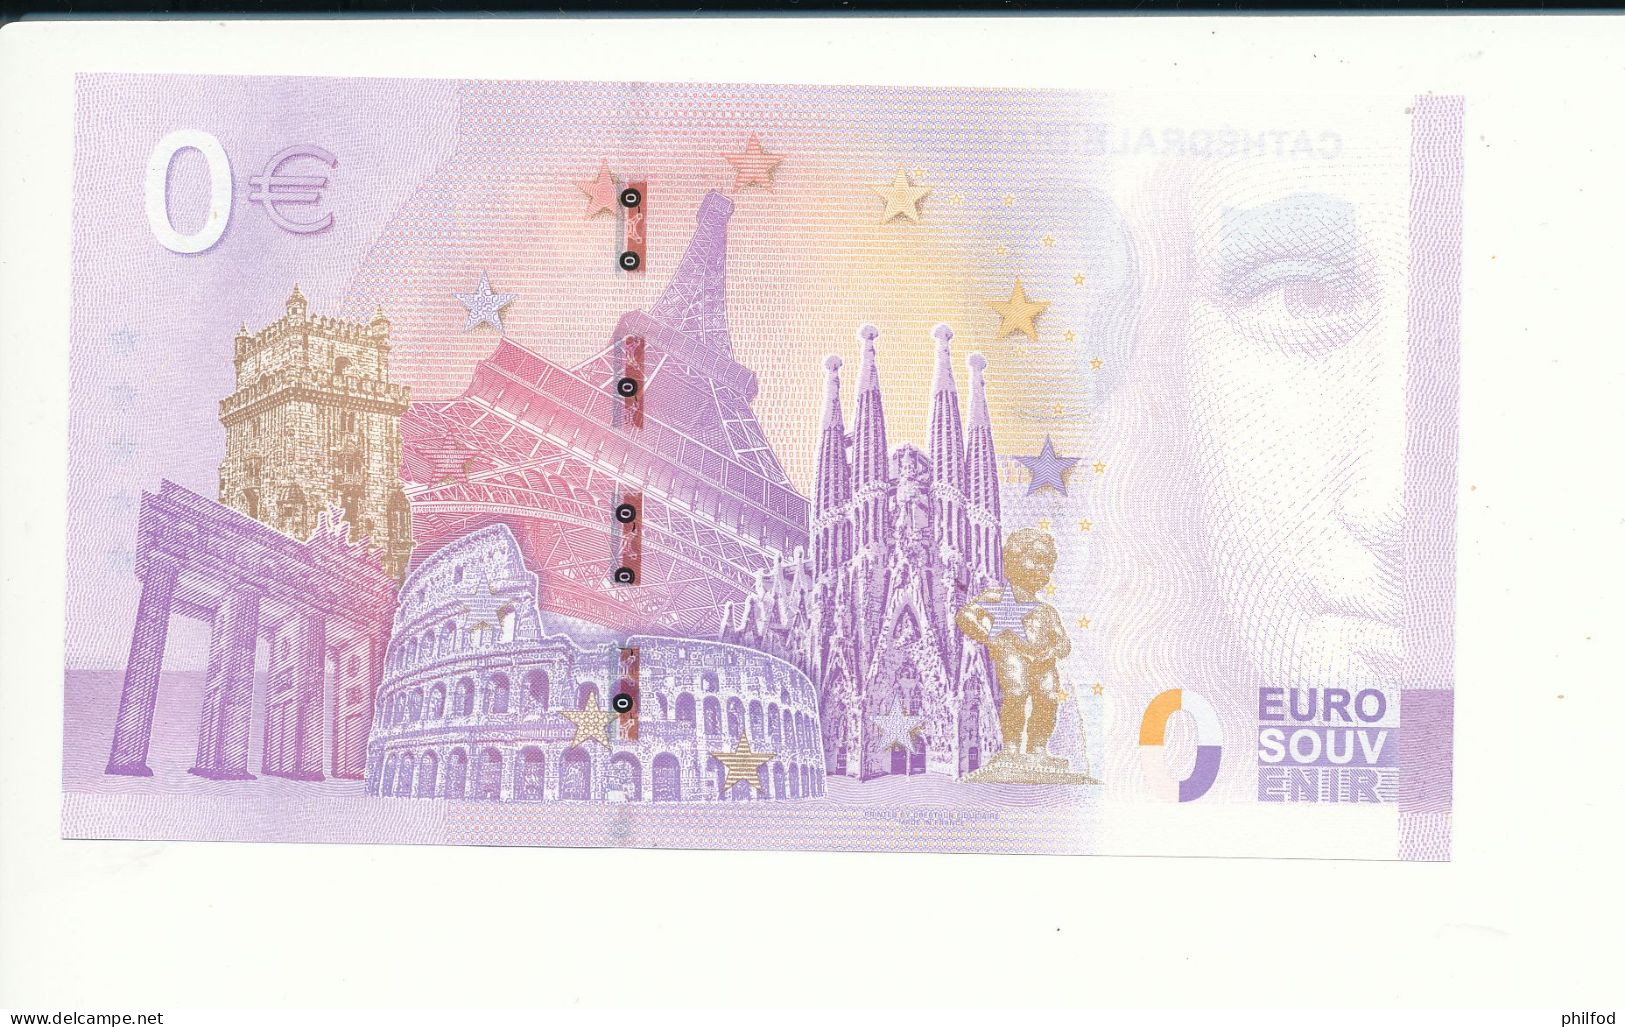 Billet Souvenir - 0 Euro - CATHEDRALE D'AMIENS - UEHX - 2023-1 - N° 5260 - Lots & Kiloware - Banknotes